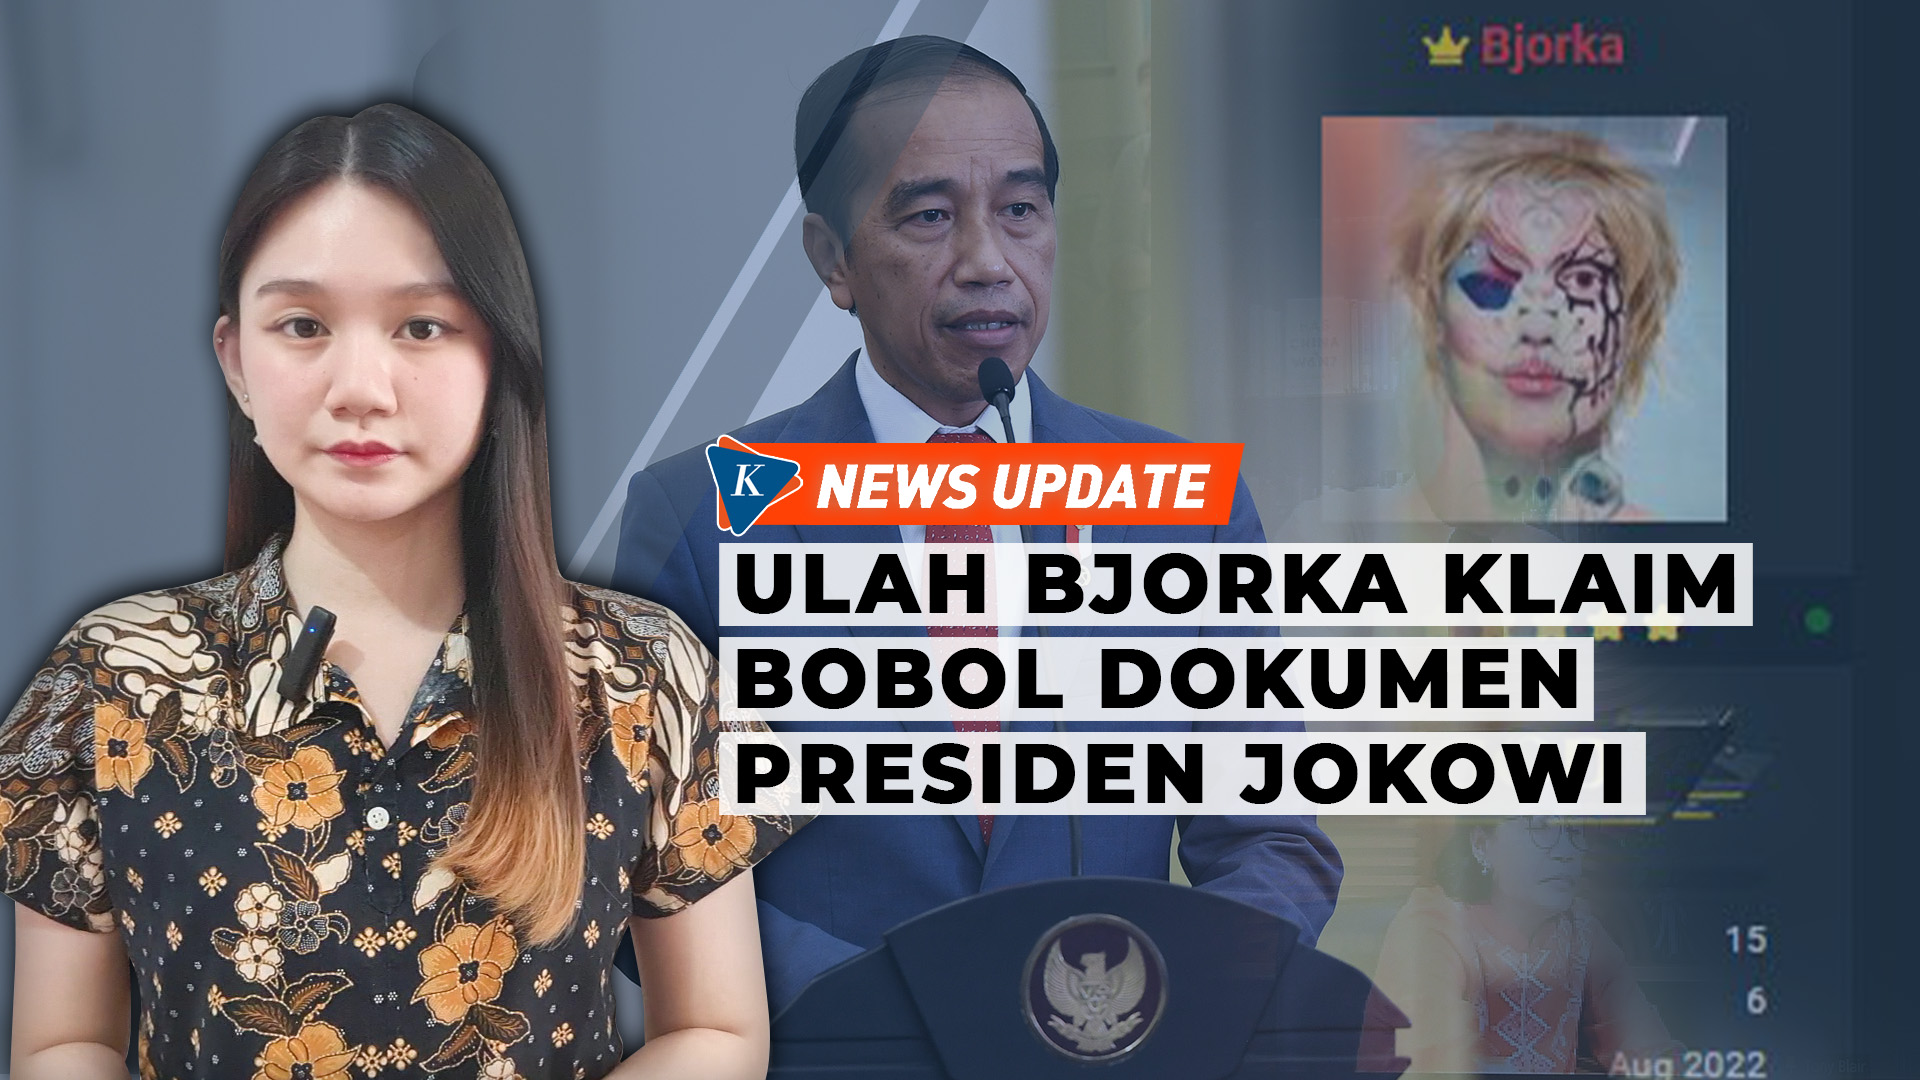 Hacker Bjorka Klaim Bobol Dokumen Jokowi hingga Sentil Kasus Munir